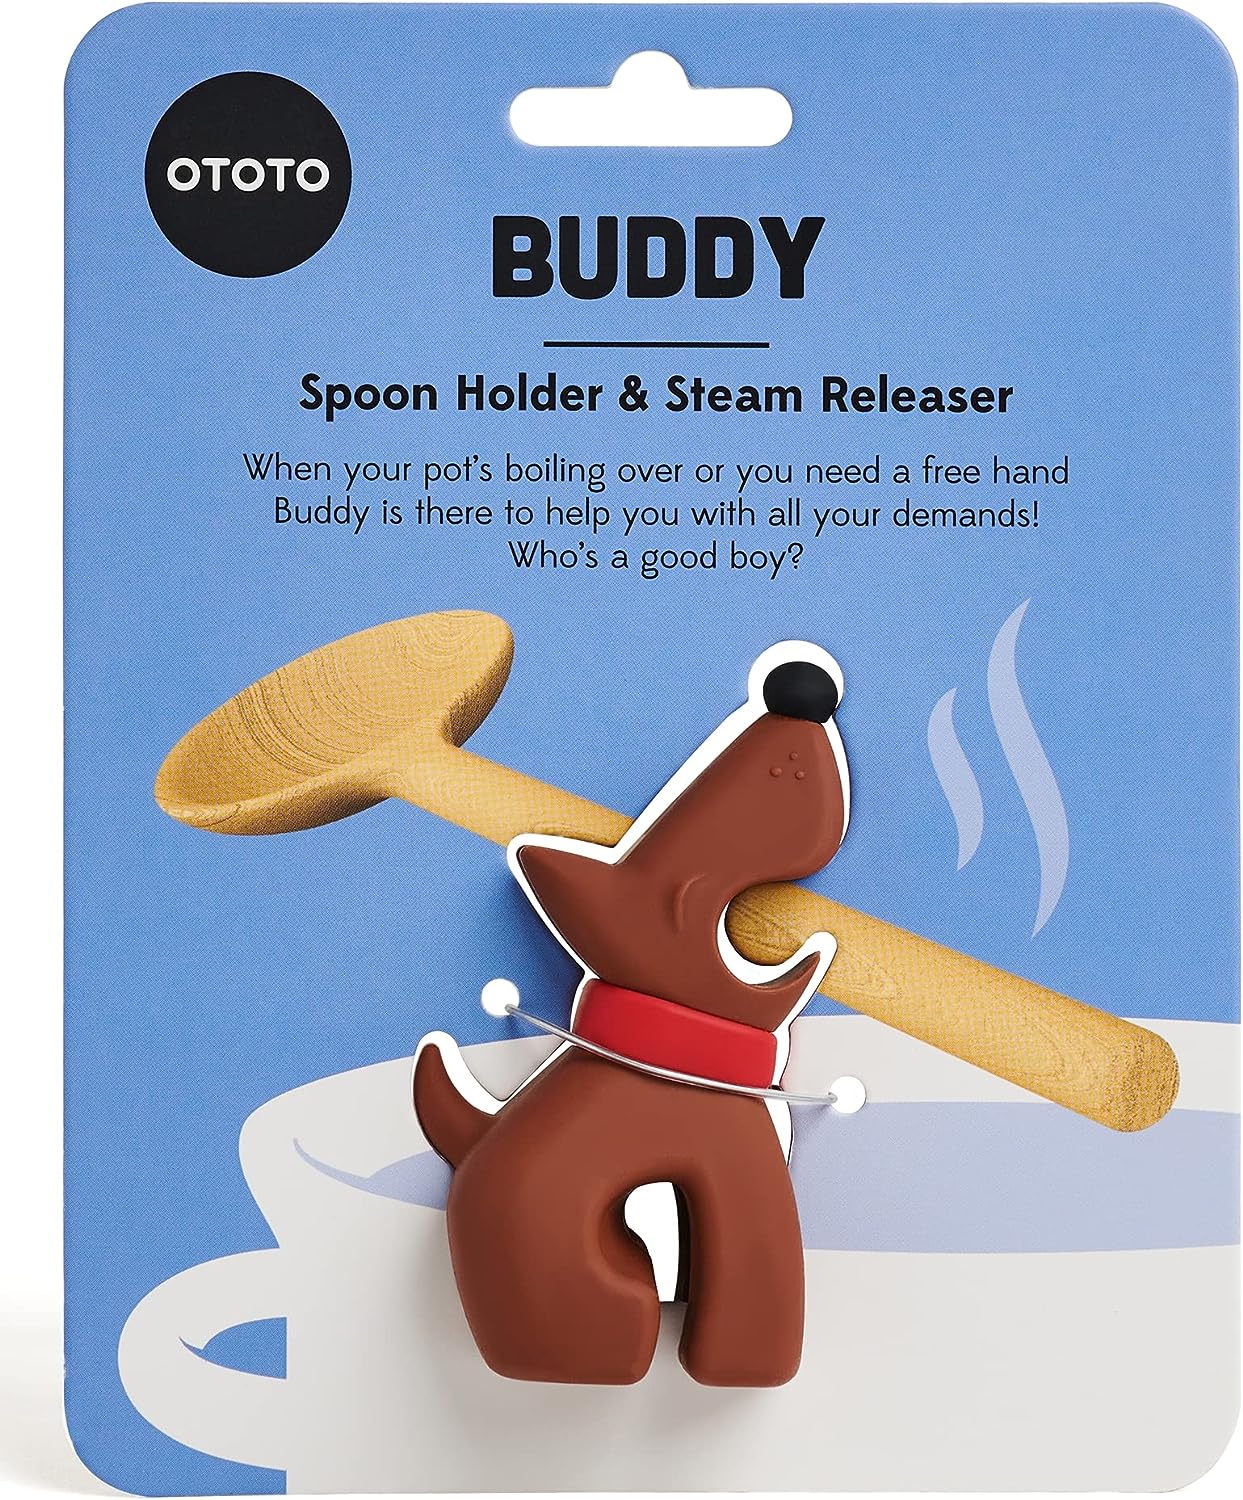 OTOTO Buddy Spoon Holder and Steamer Releaser | Sandstone